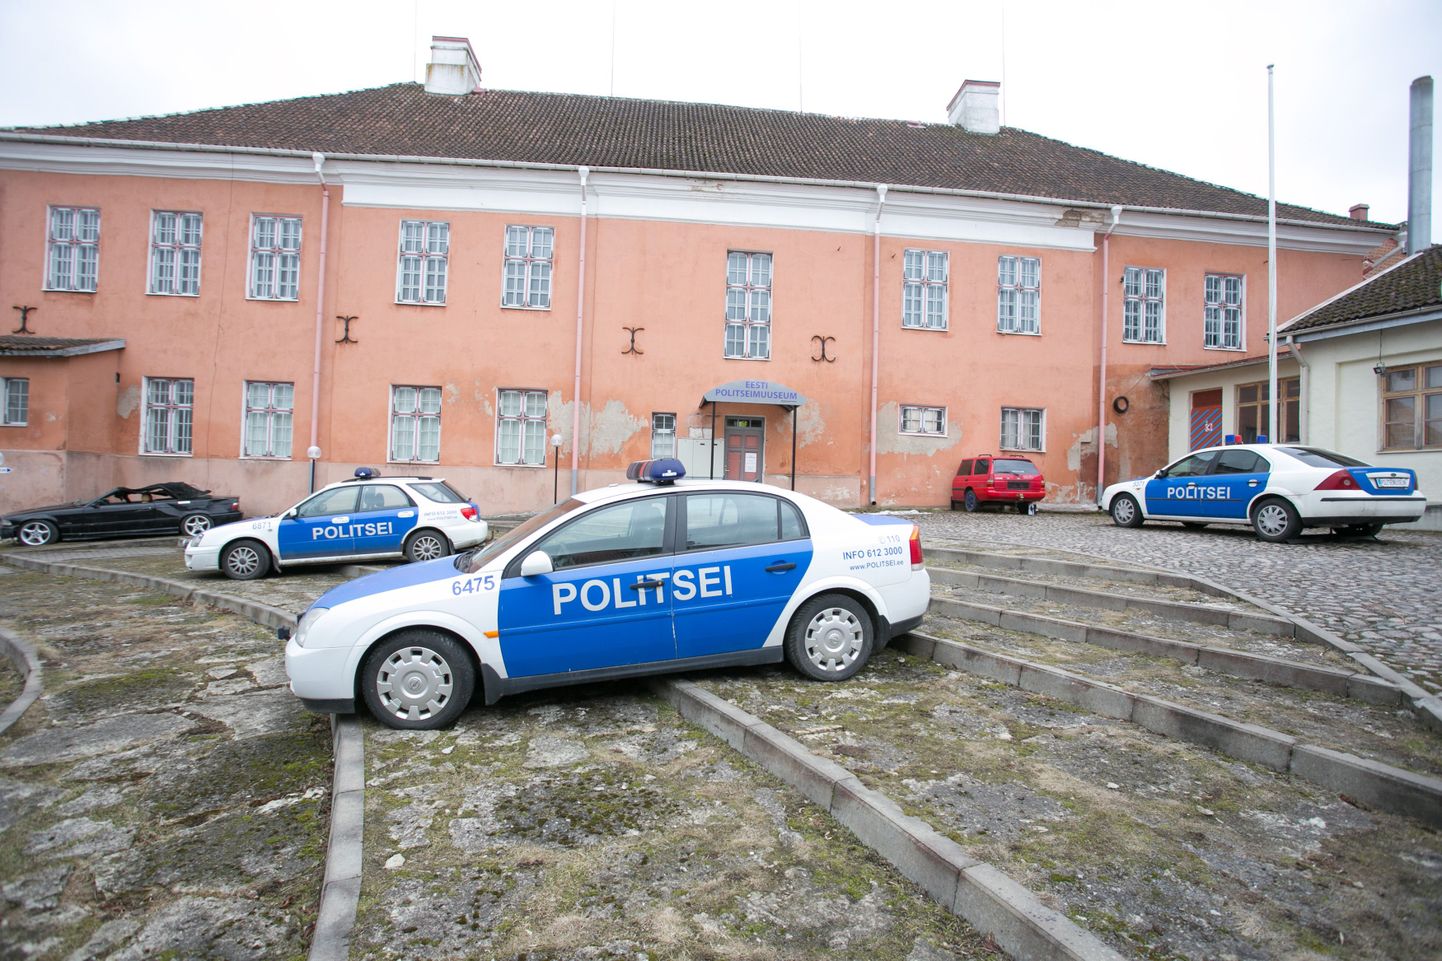 Eesti Politseimuuseum.